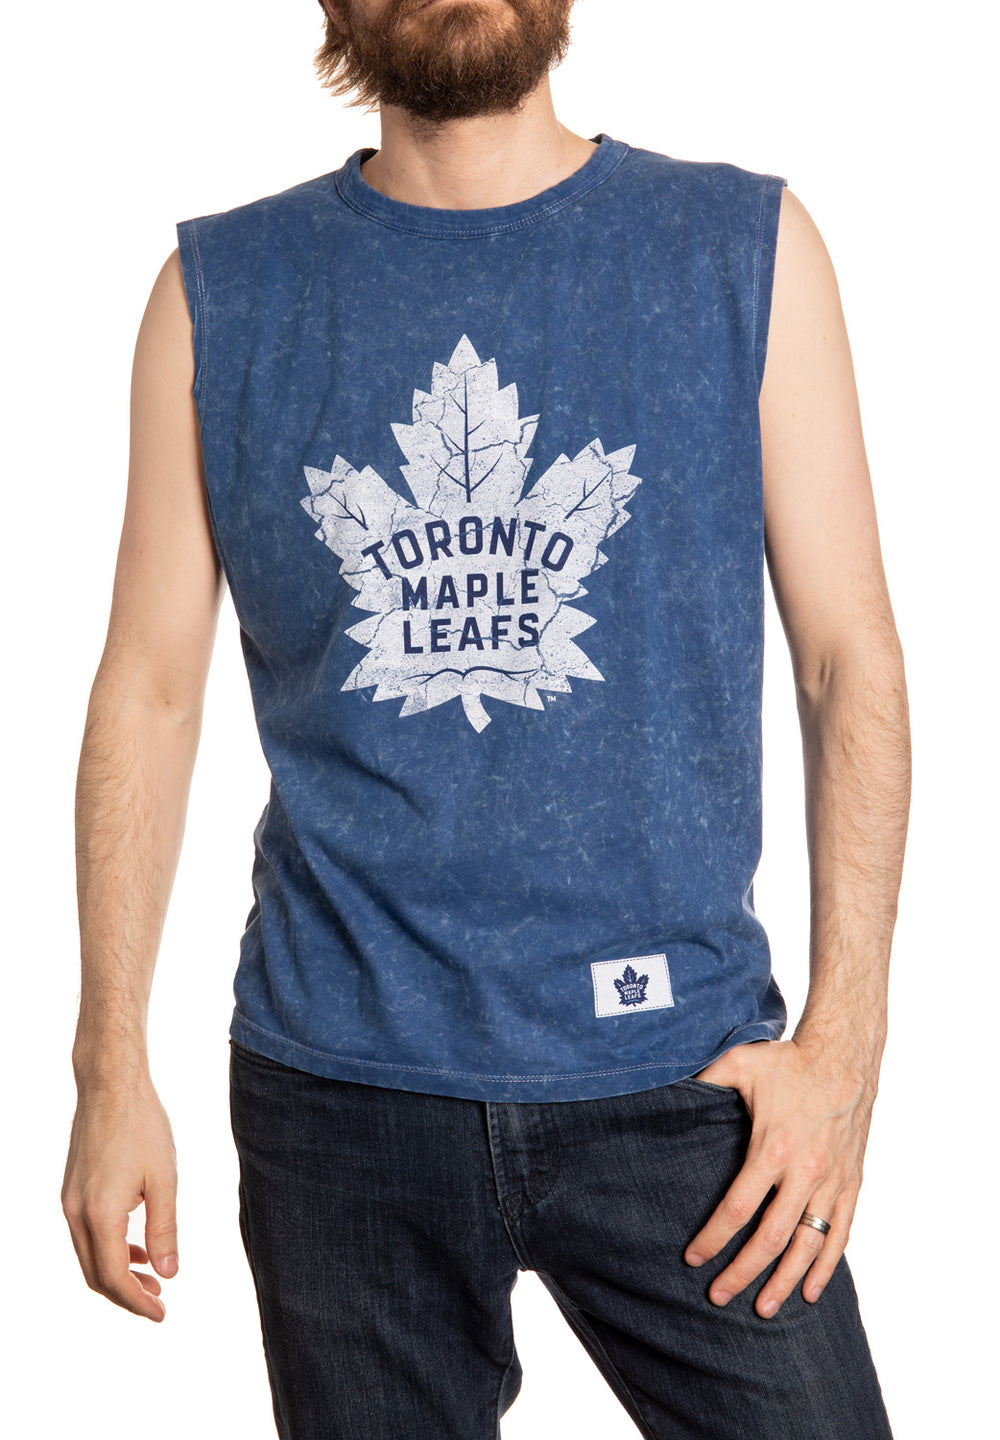 Toronto Maple Leafs Acid Wash Sleeveless Shirt Front VIew. Blue Shirt